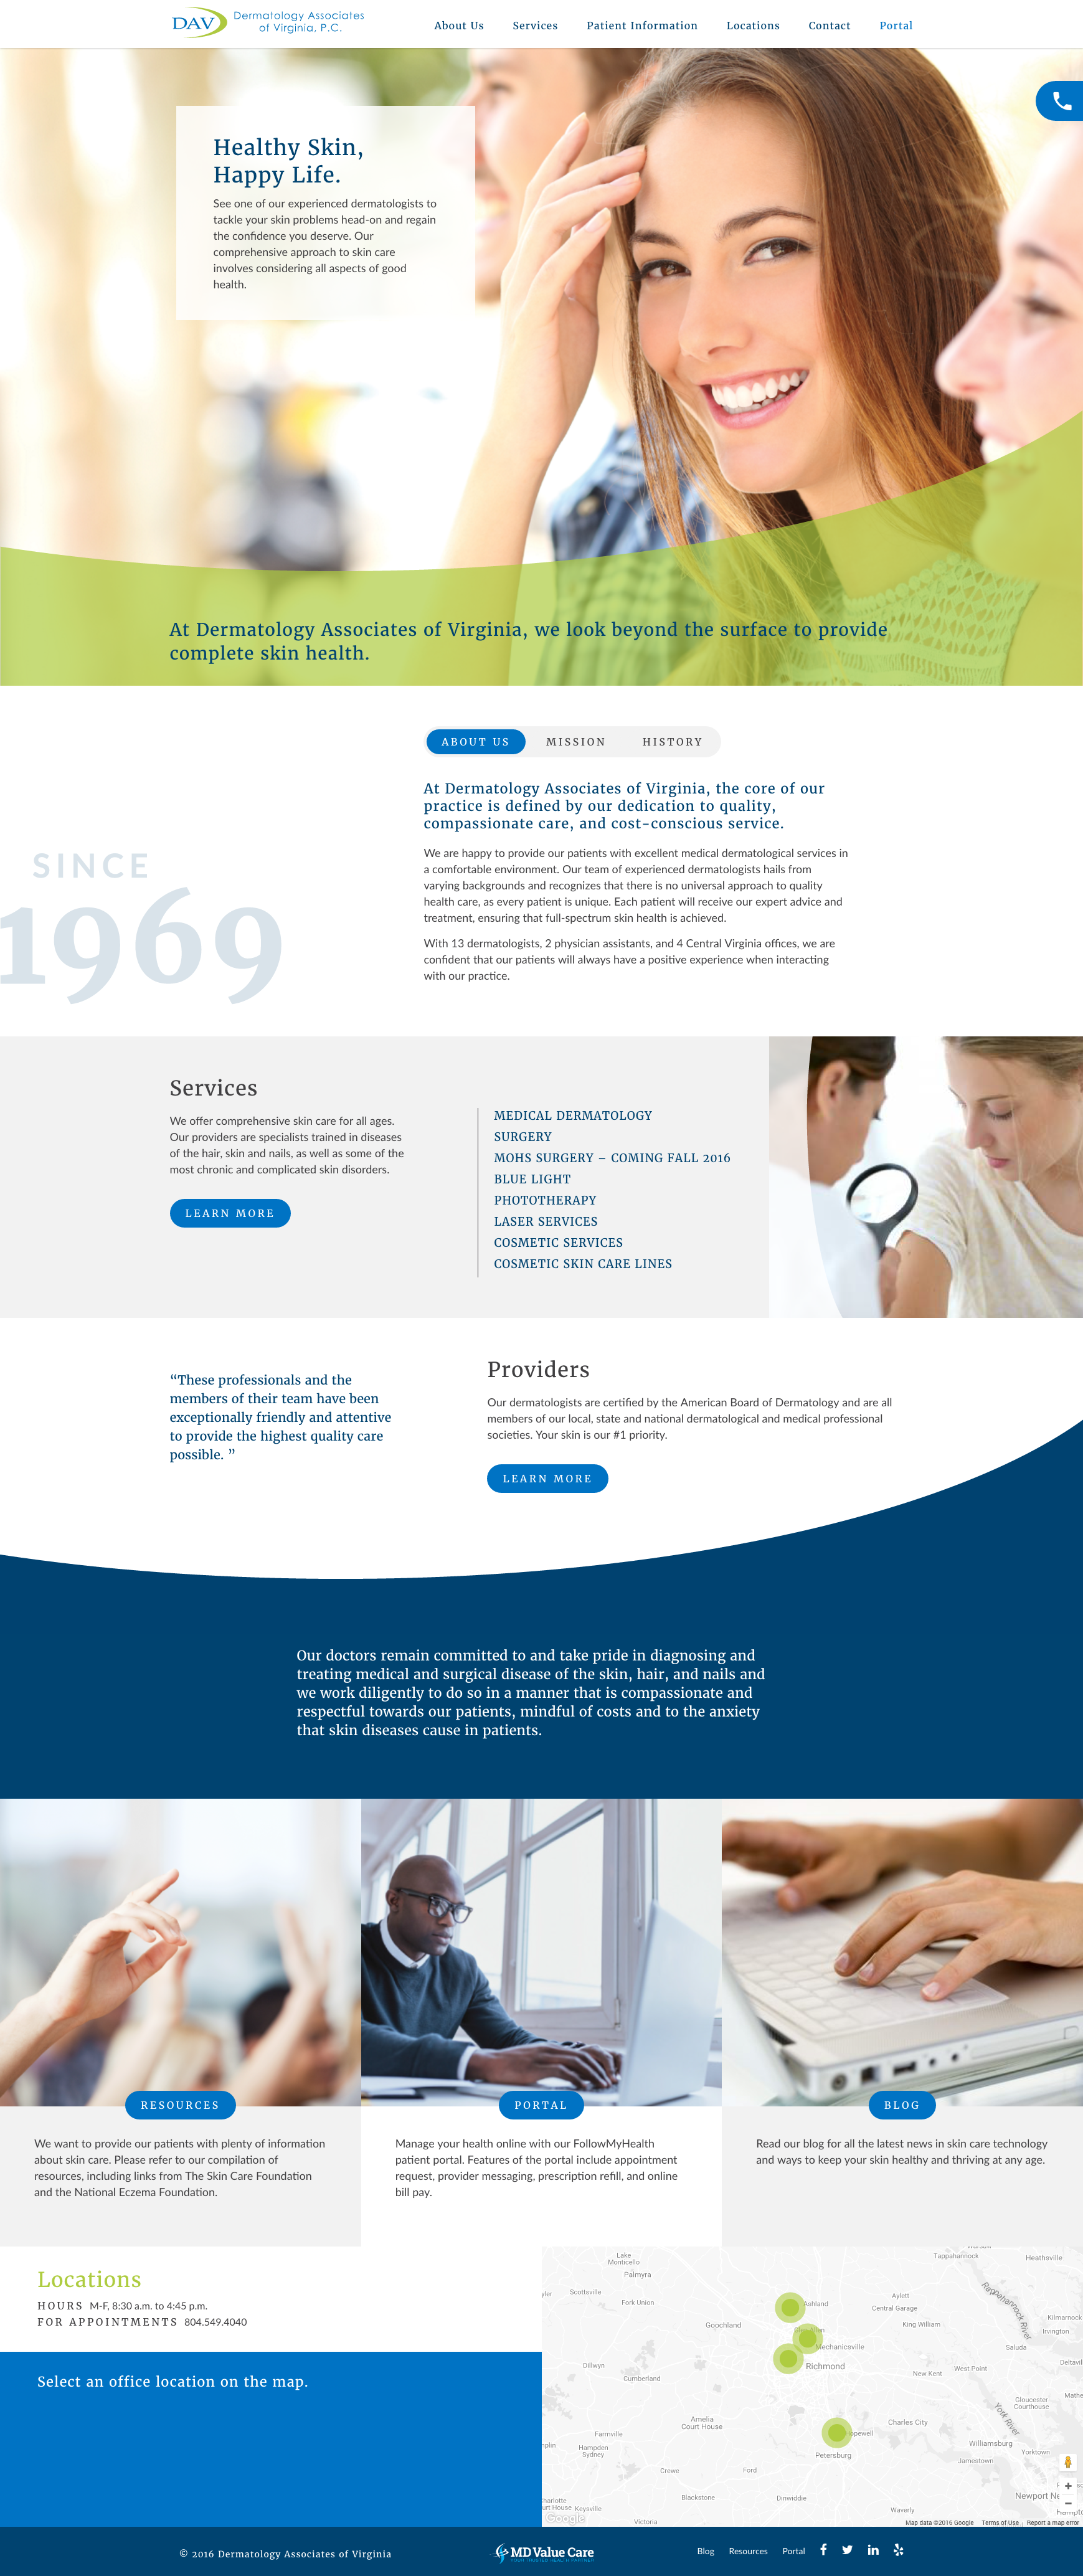 Website Design & Development for Dermatology Associates of Virginia